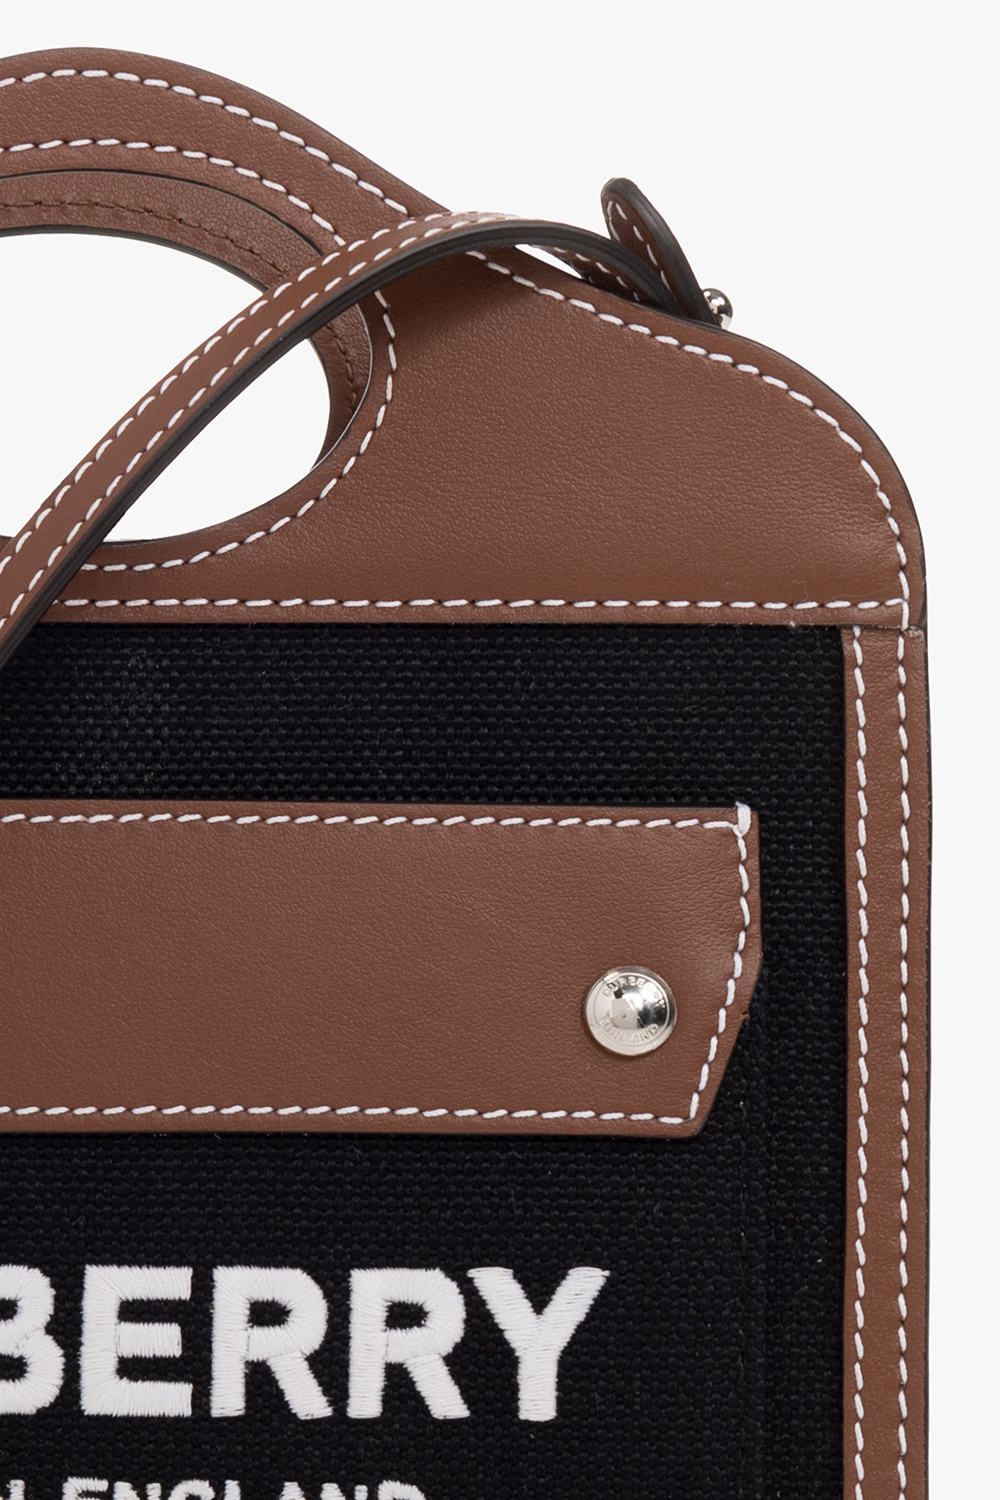 burberry Polo ‘Pocket Micro’ shoulder bag